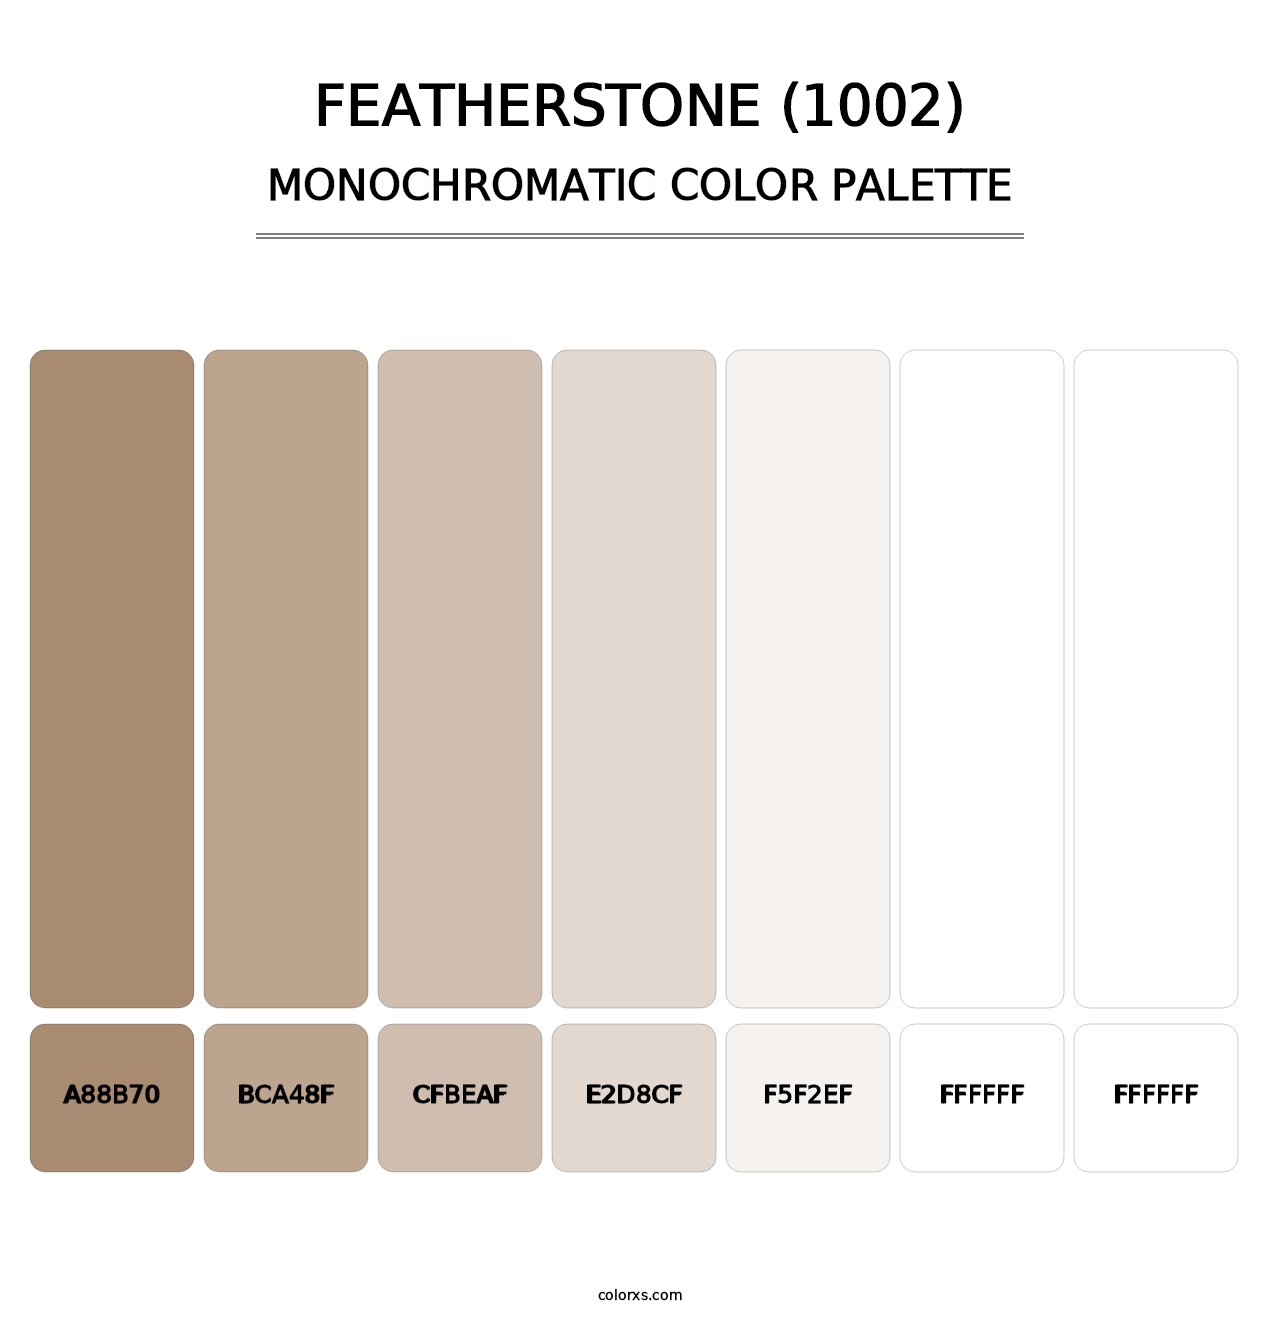 Featherstone (1002) - Monochromatic Color Palette